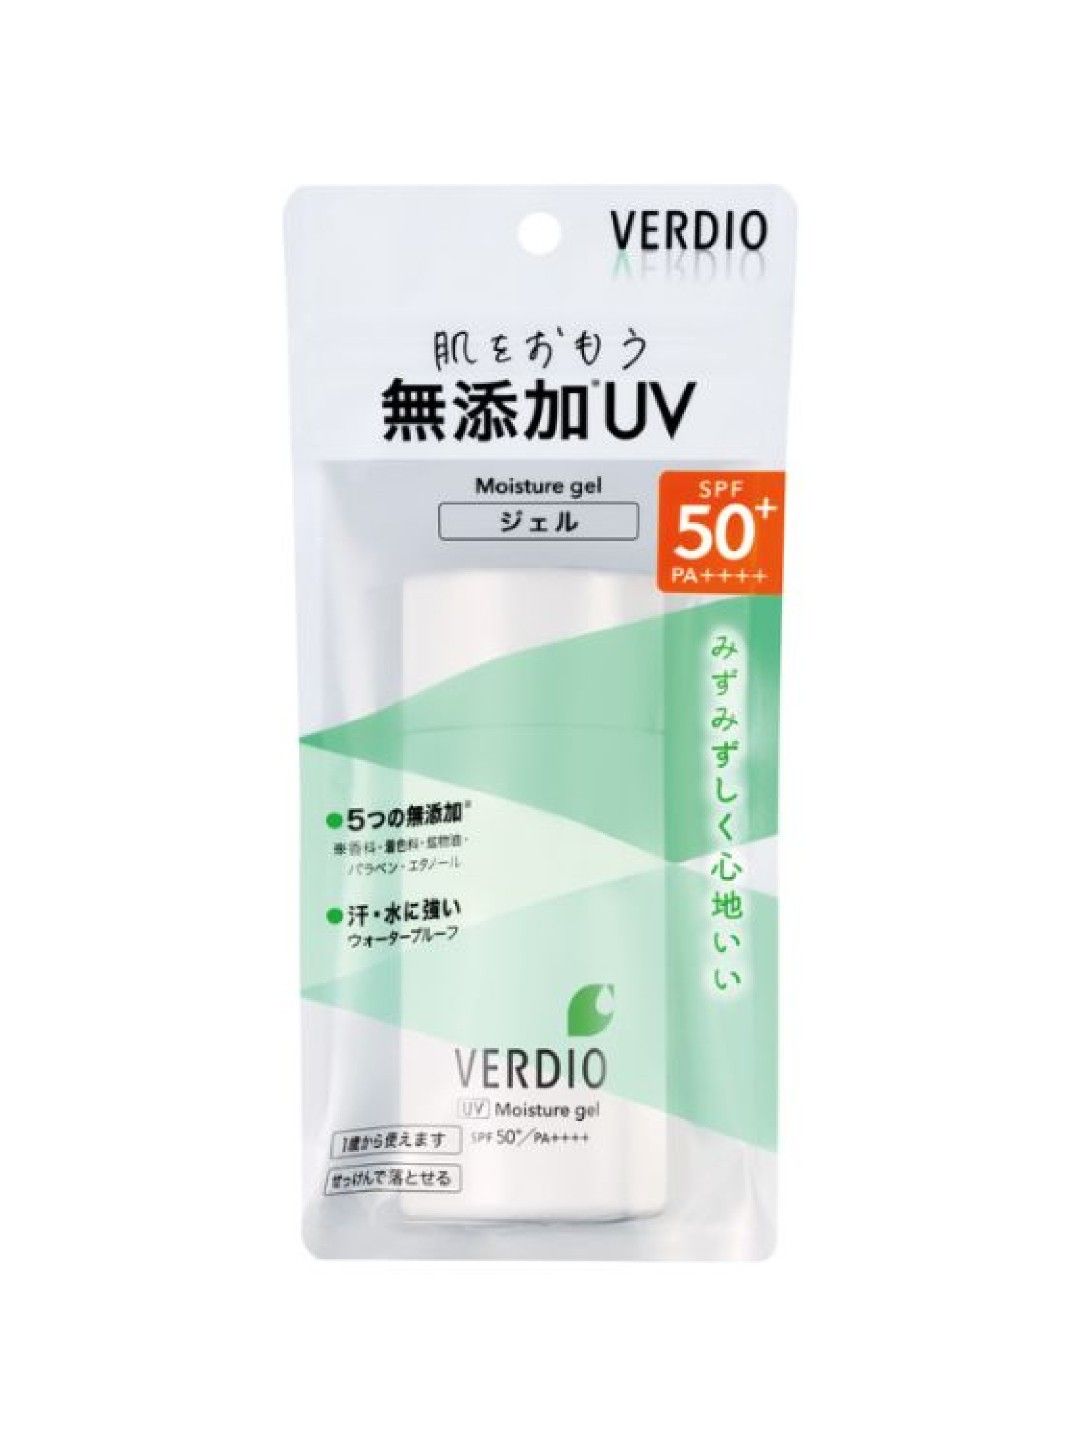 OMI Menturm VERDIO UV Moisture Gel Sunscreen SPF50+ (80g)